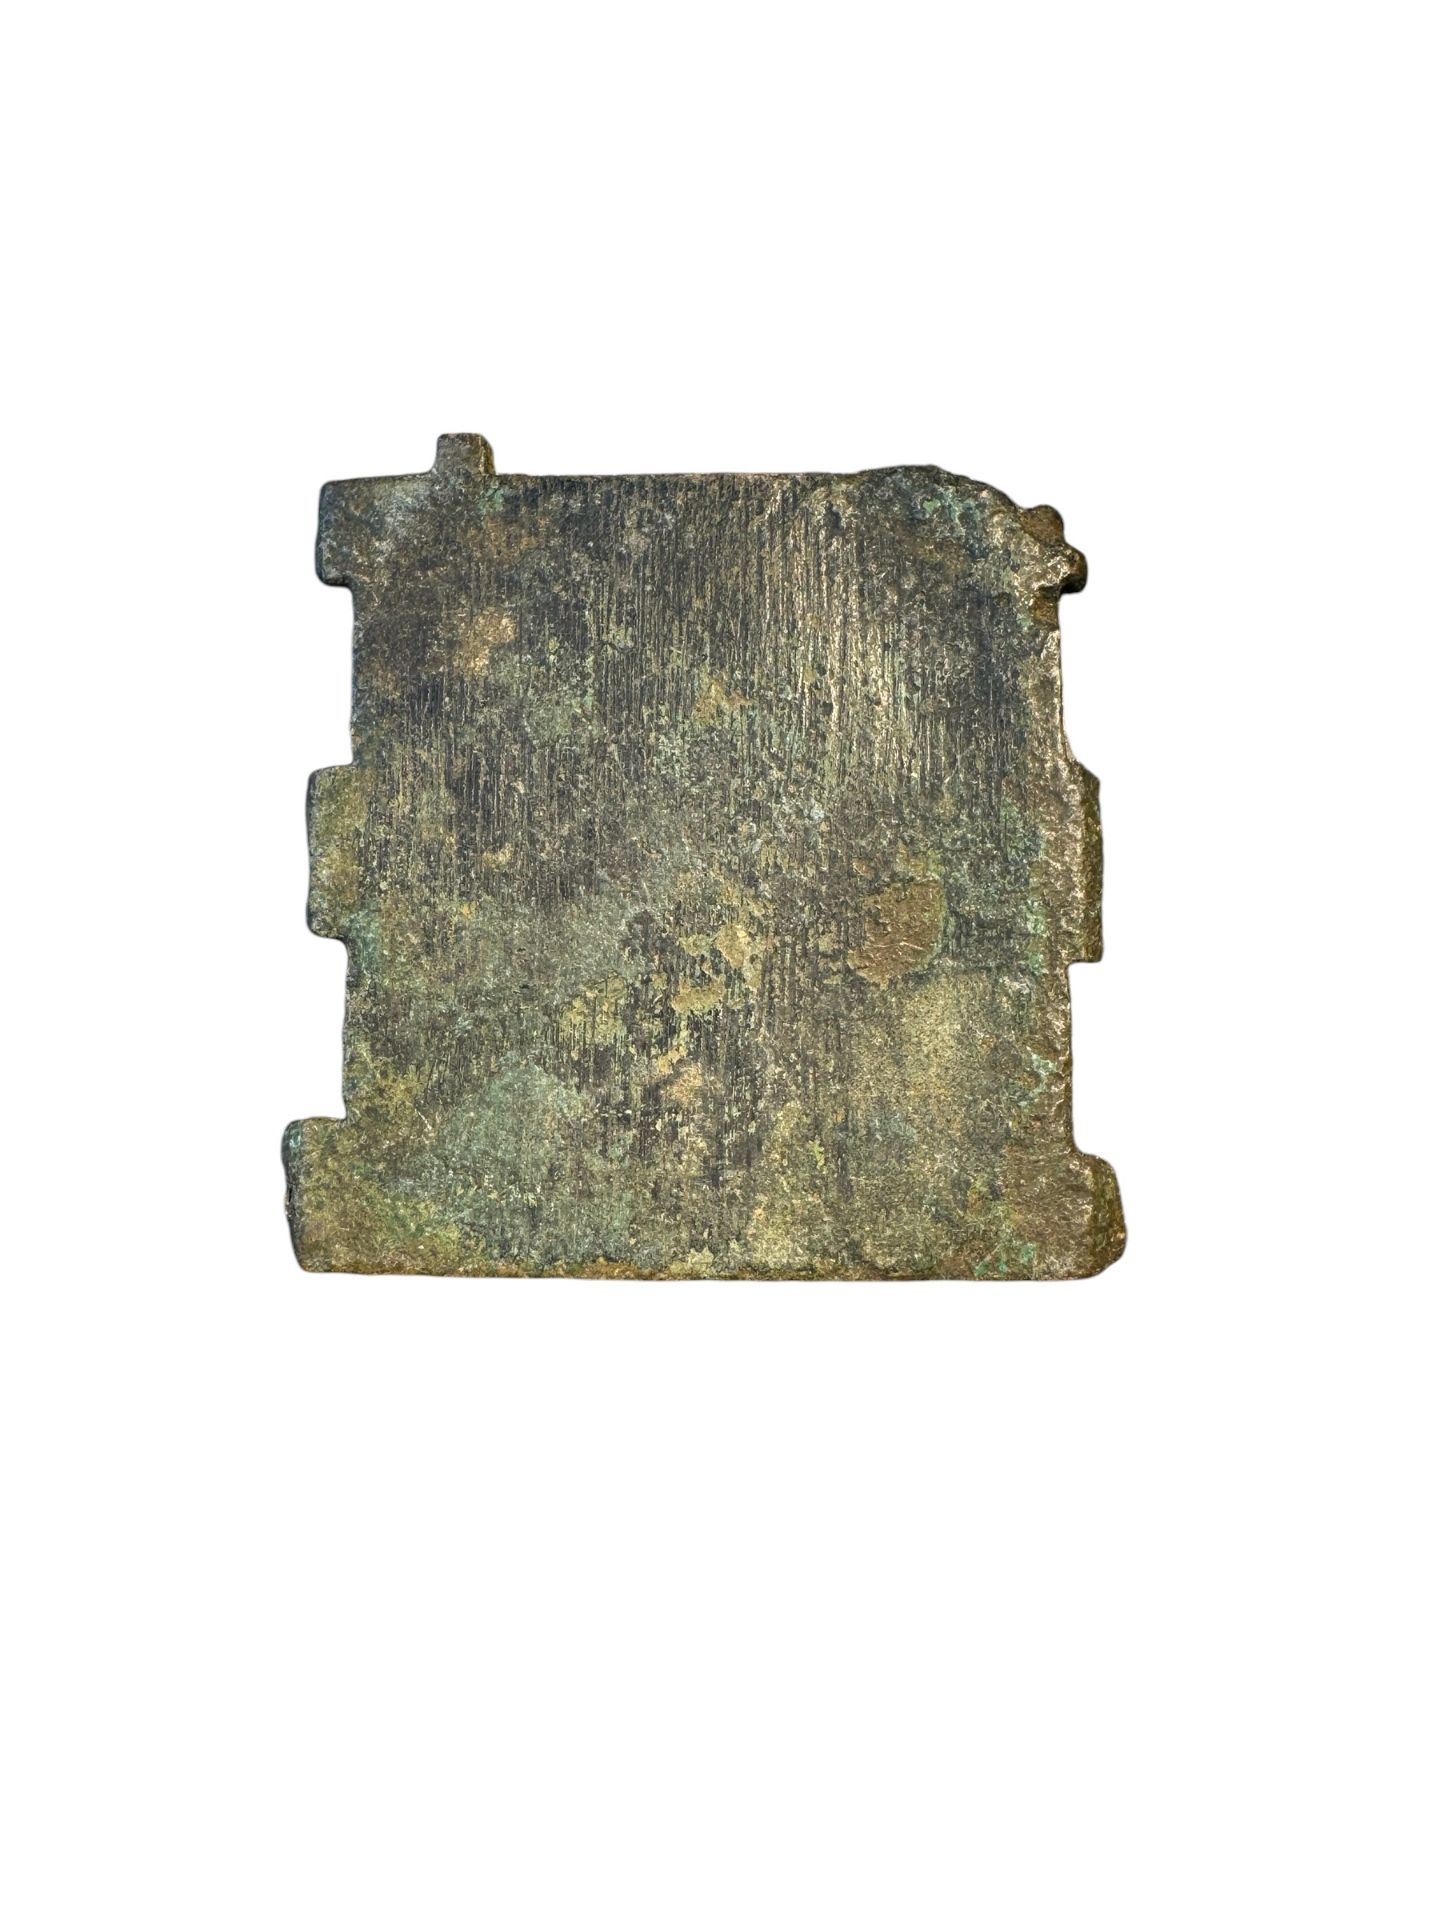 Antiquities: 17th-18th Century Bronze Orthodox Reliquary £5 UK Post £15 International - Image 2 of 2